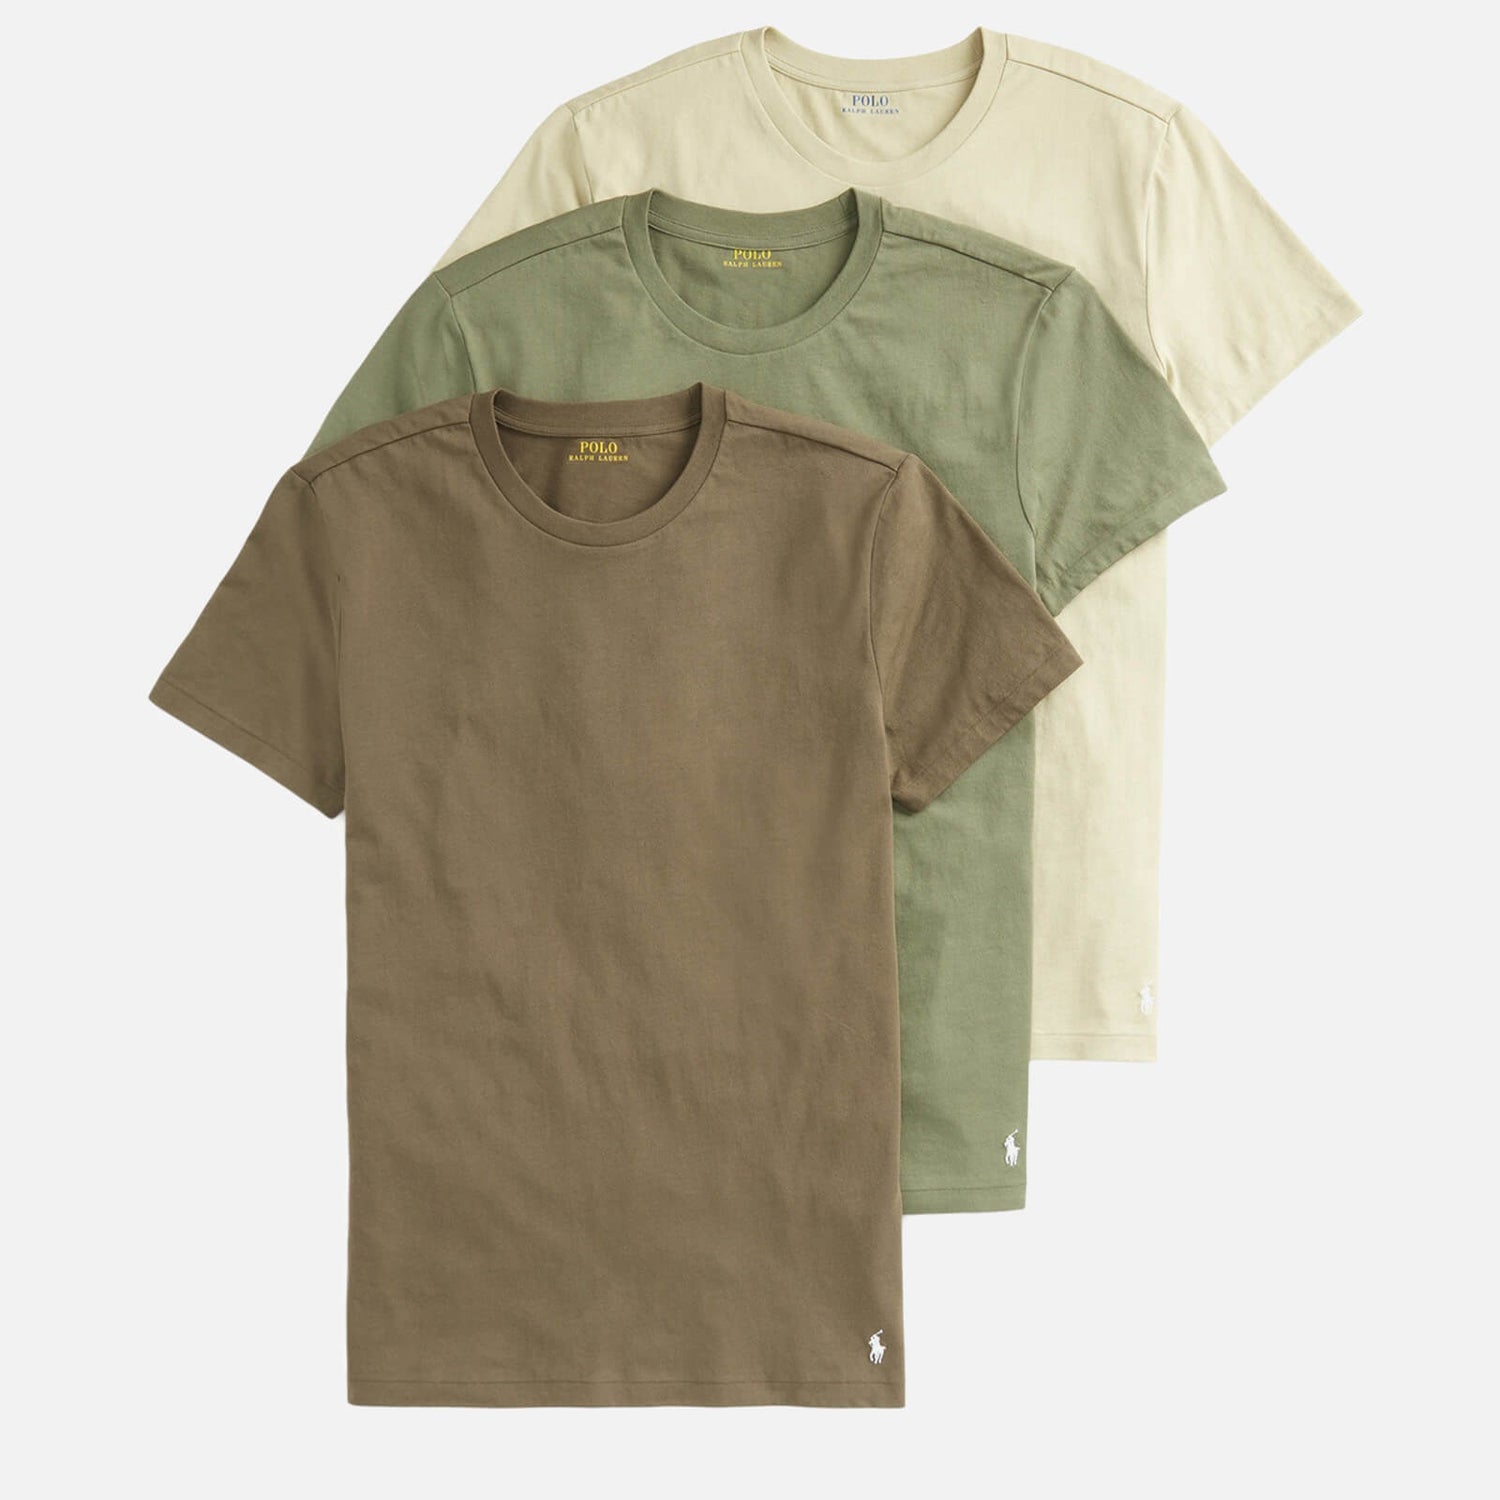 Polo Ralph Lauren Men's 3-Pack Crewneck T-Shirt - Light Olive/Army Olive/Defender Green